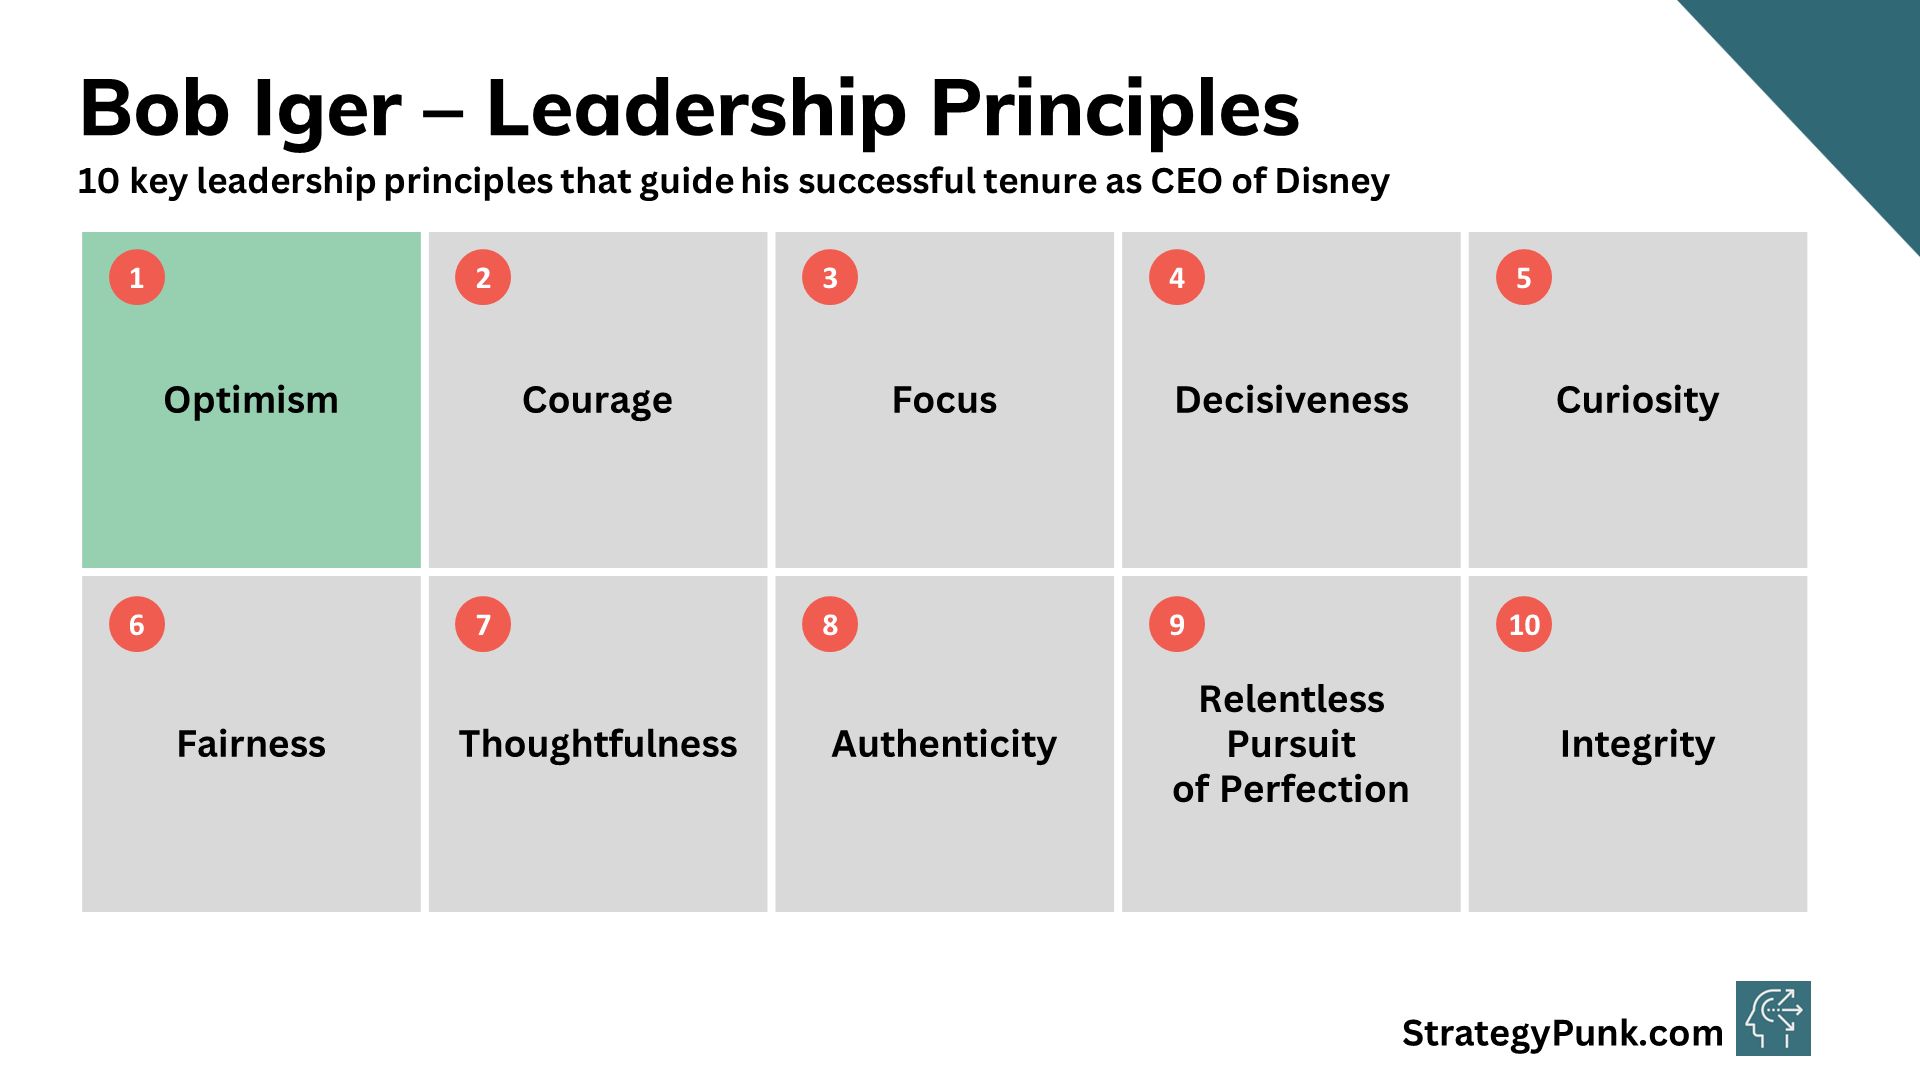 Bob Iger's 10 Key Leadership Principles for Disney's Success